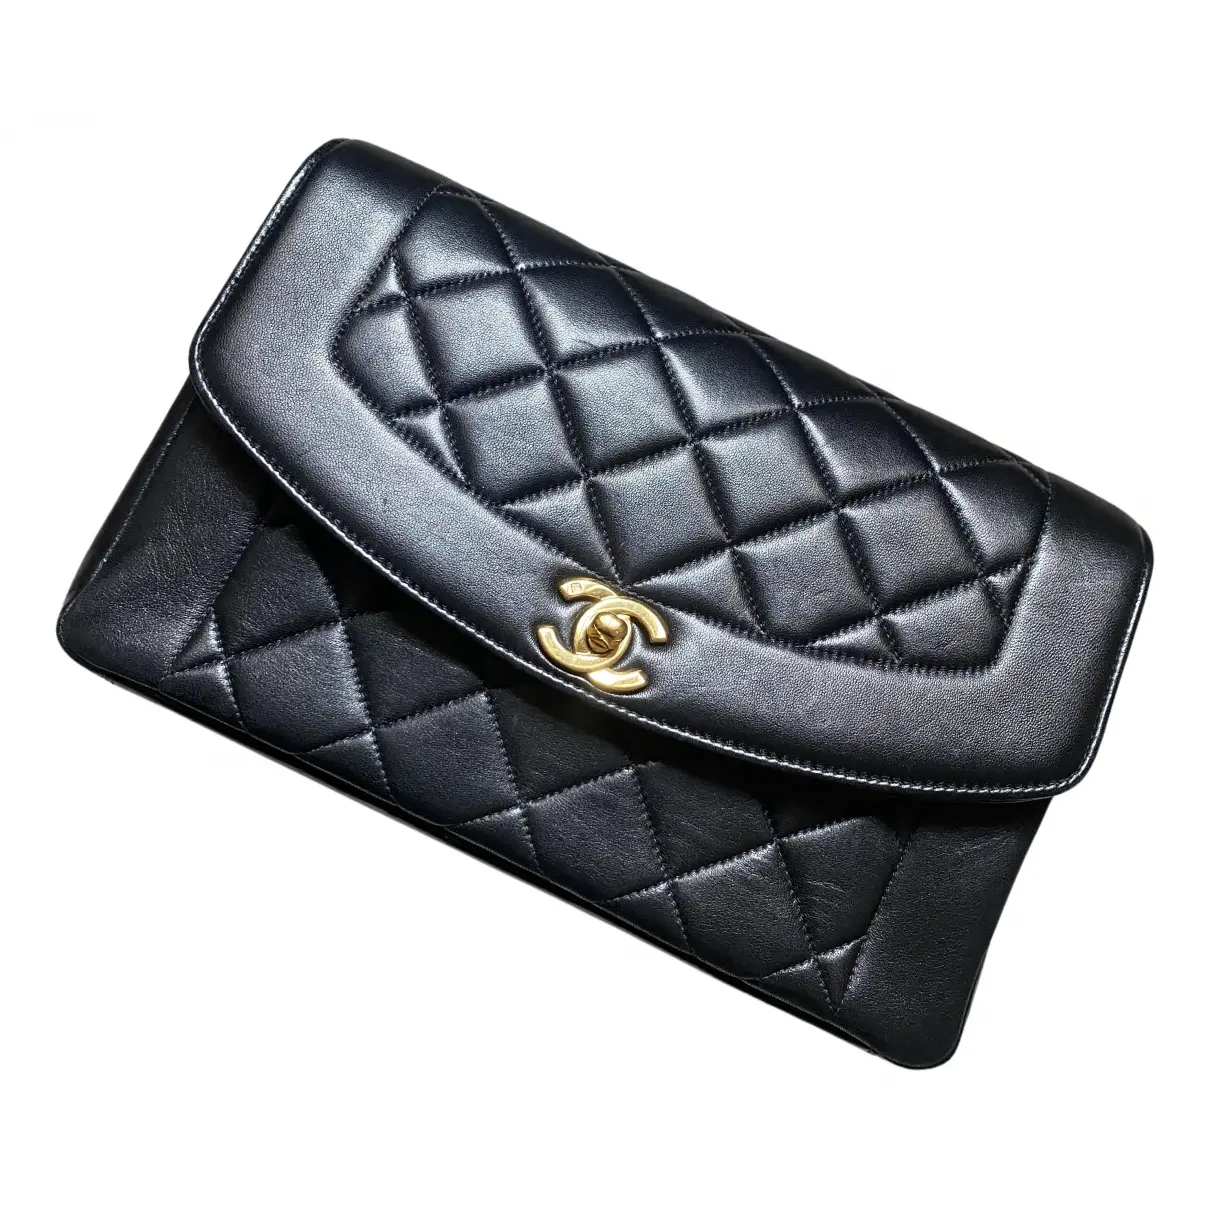 Diana leather handbag Chanel - Vintage